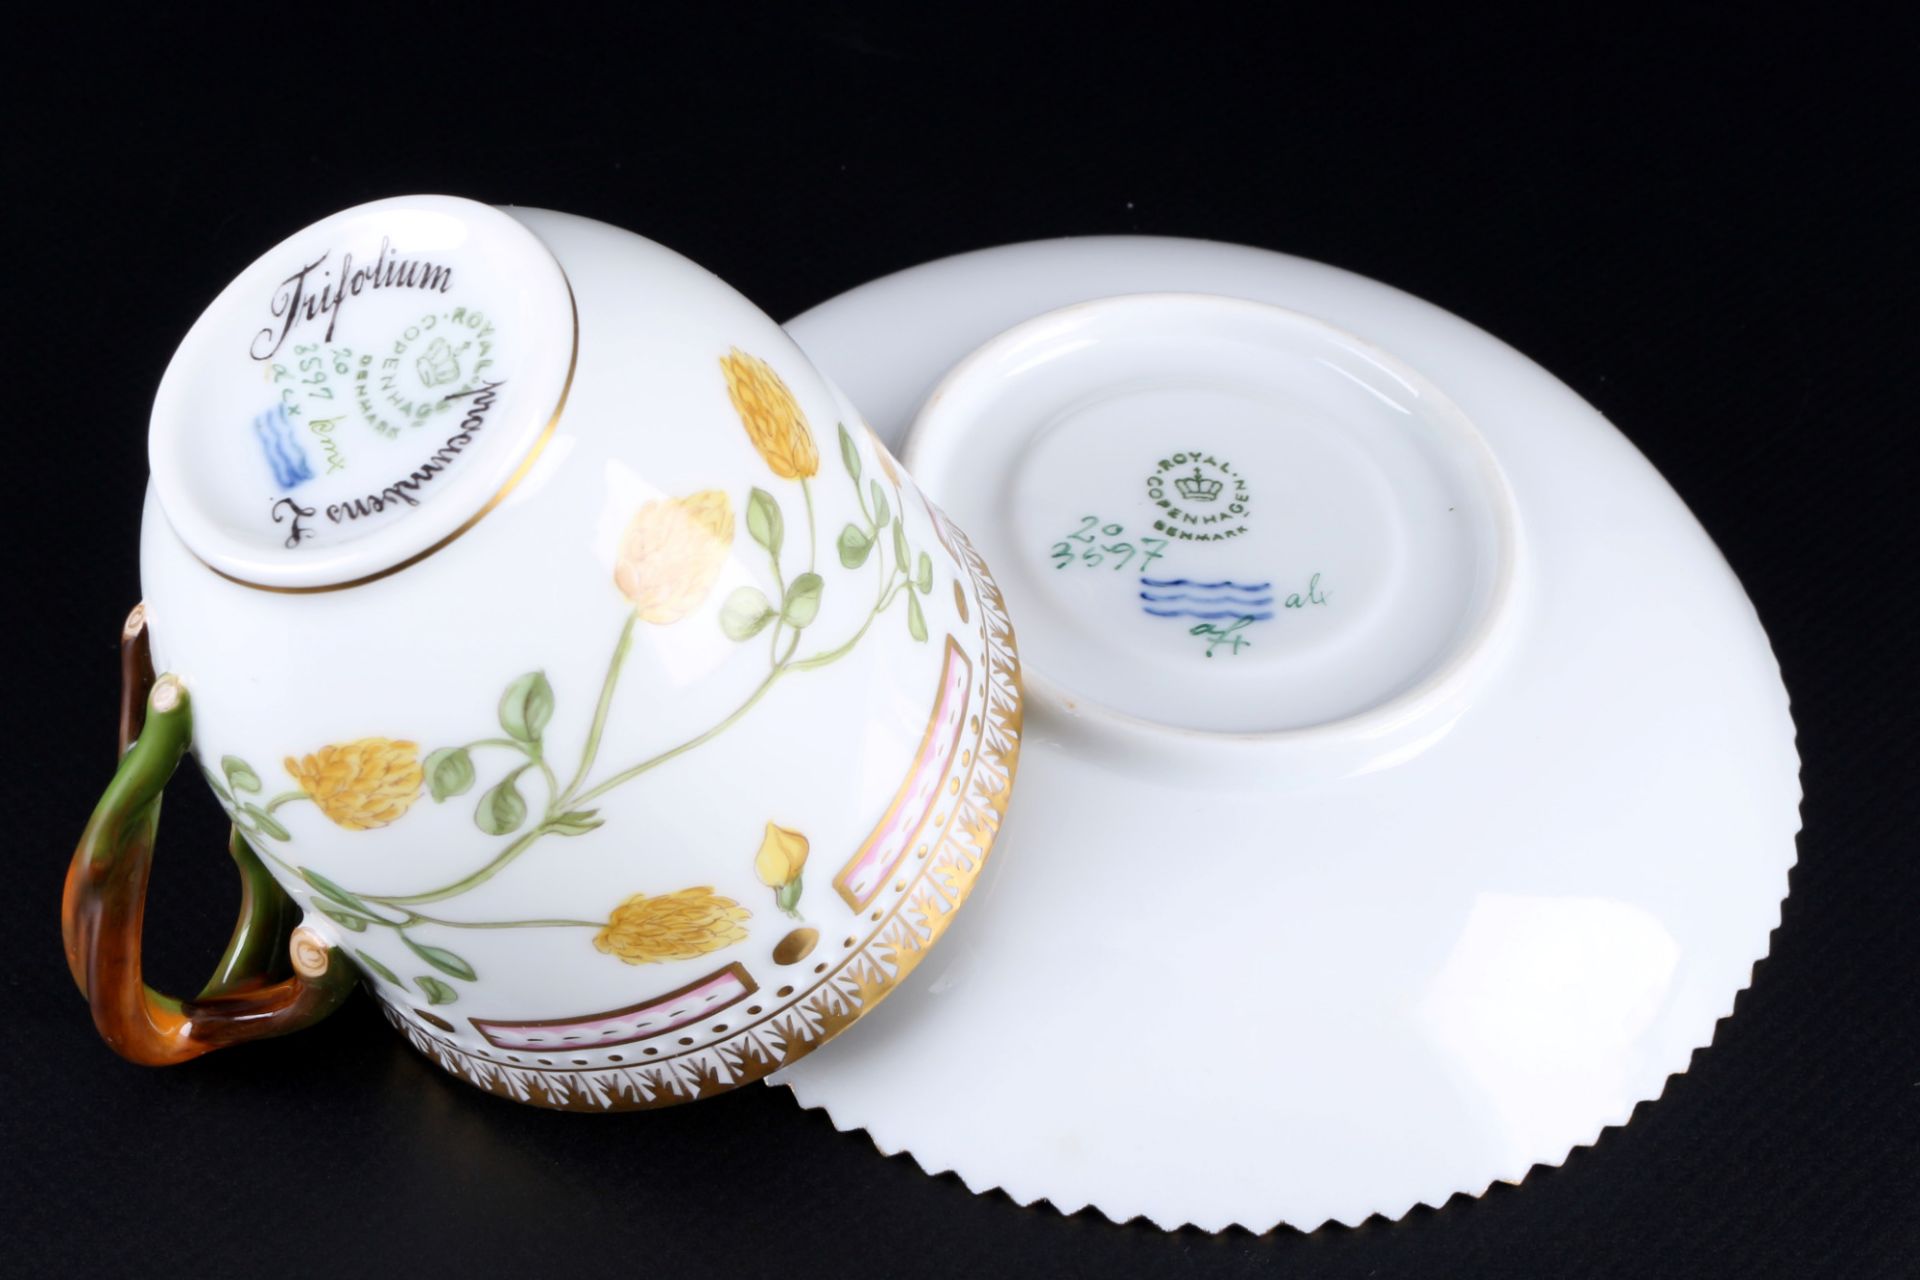 Royal Copenhagen Flora Danica coffee cup with saucer 3597 1st choice, Kaffeetasse, - Image 5 of 5